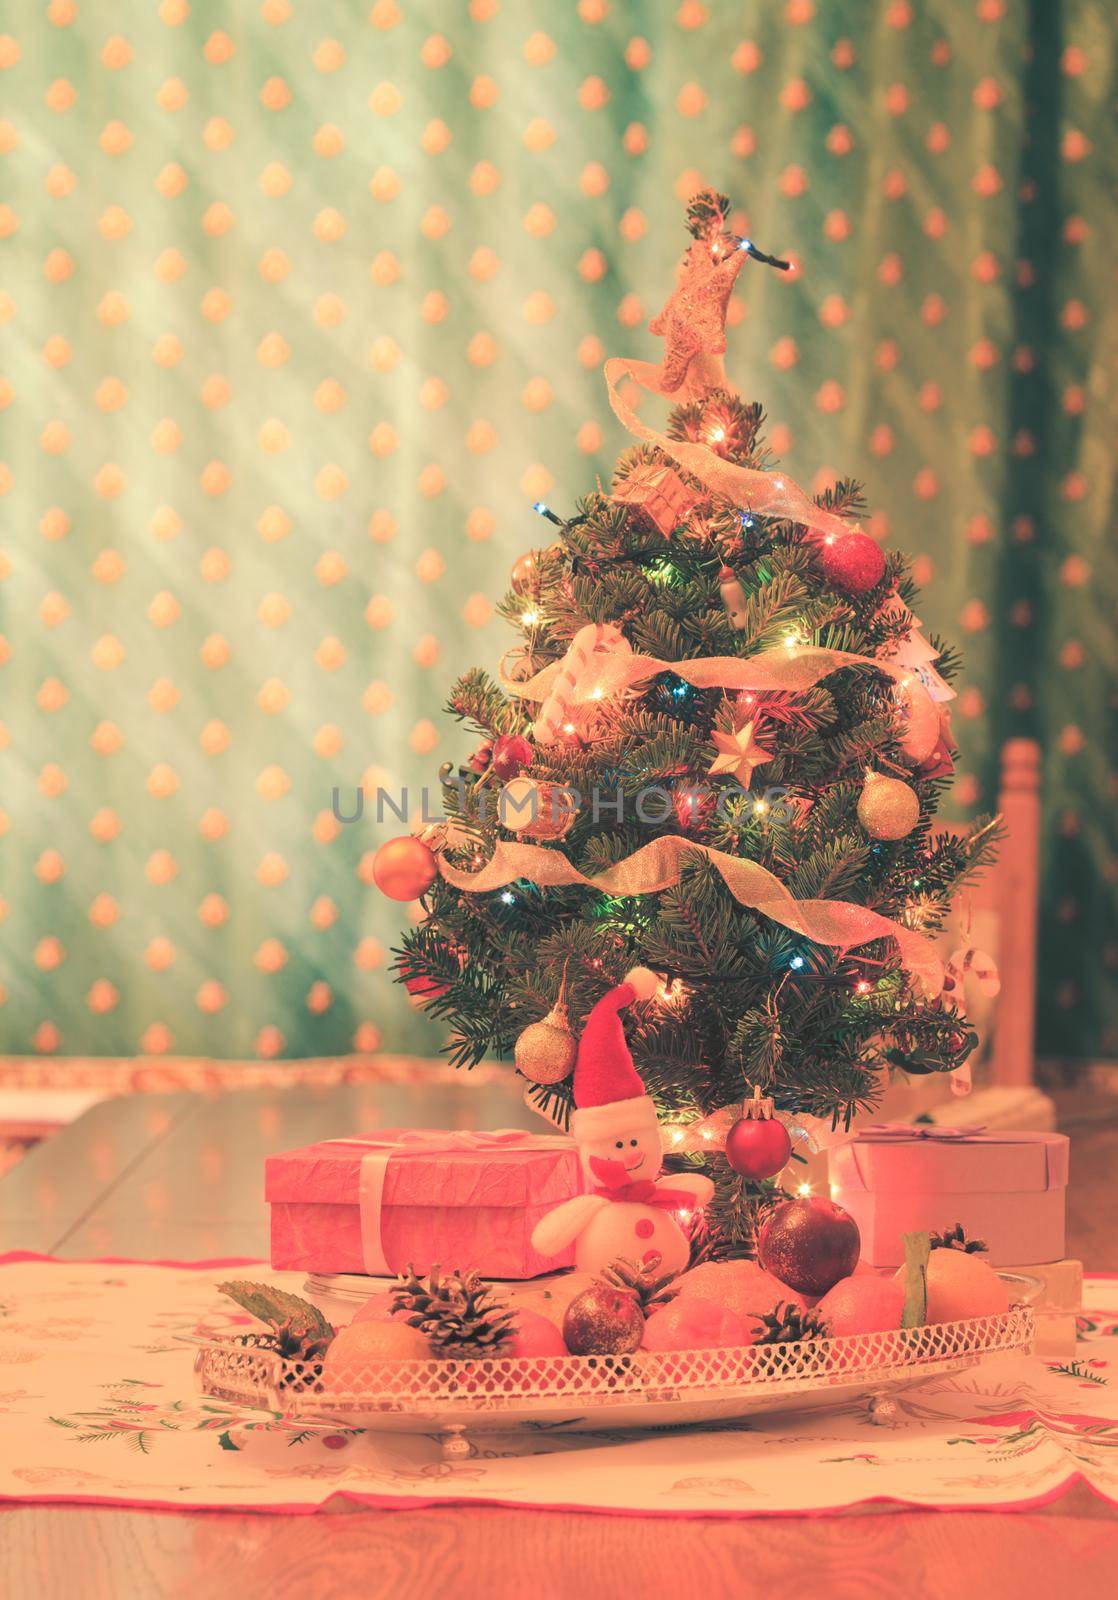 Little Christmas tree by oksix